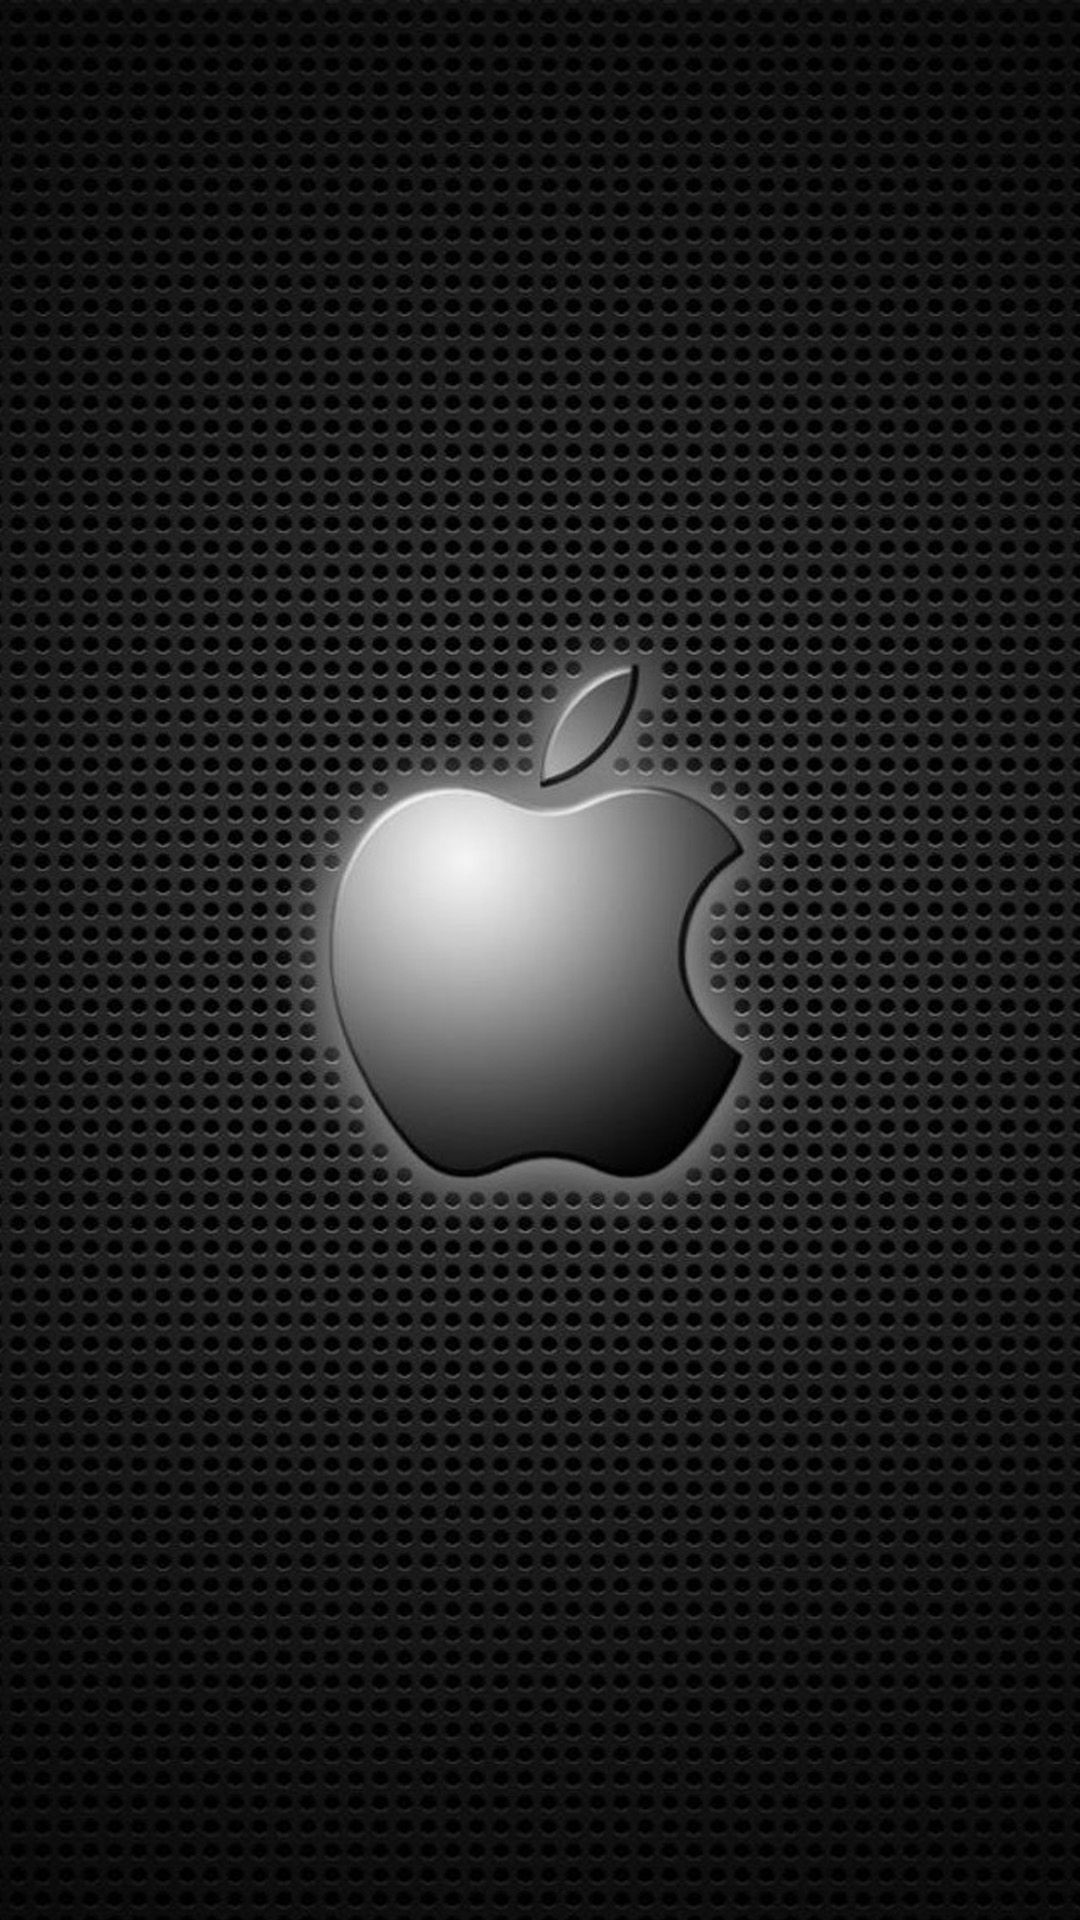 1080x19 A Aººae 42a A Apple Logo Lg G2 Wallpapers アップル 壁紙 Iphone8 1080x19 Wallpaper Teahub Io